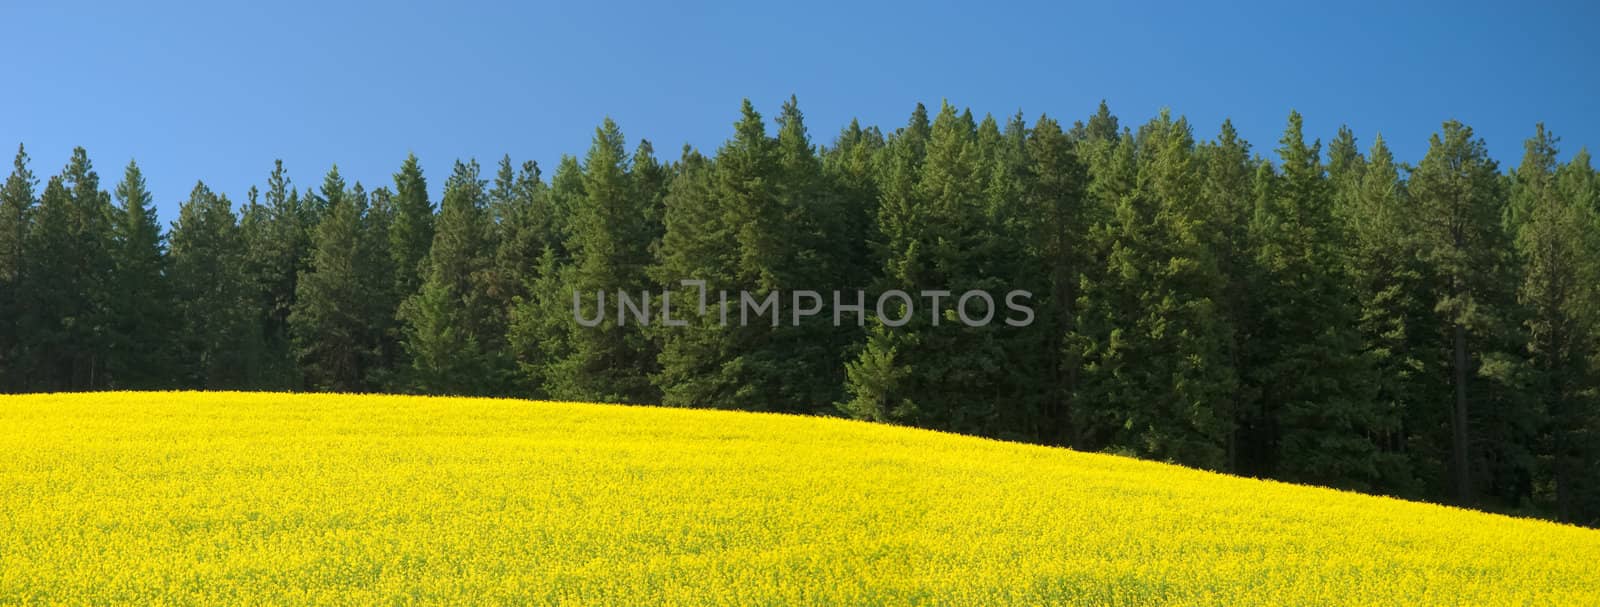 Canola field, spruce and pine trees, near Troy, Latah County, Idaho, USA by CharlesBolin